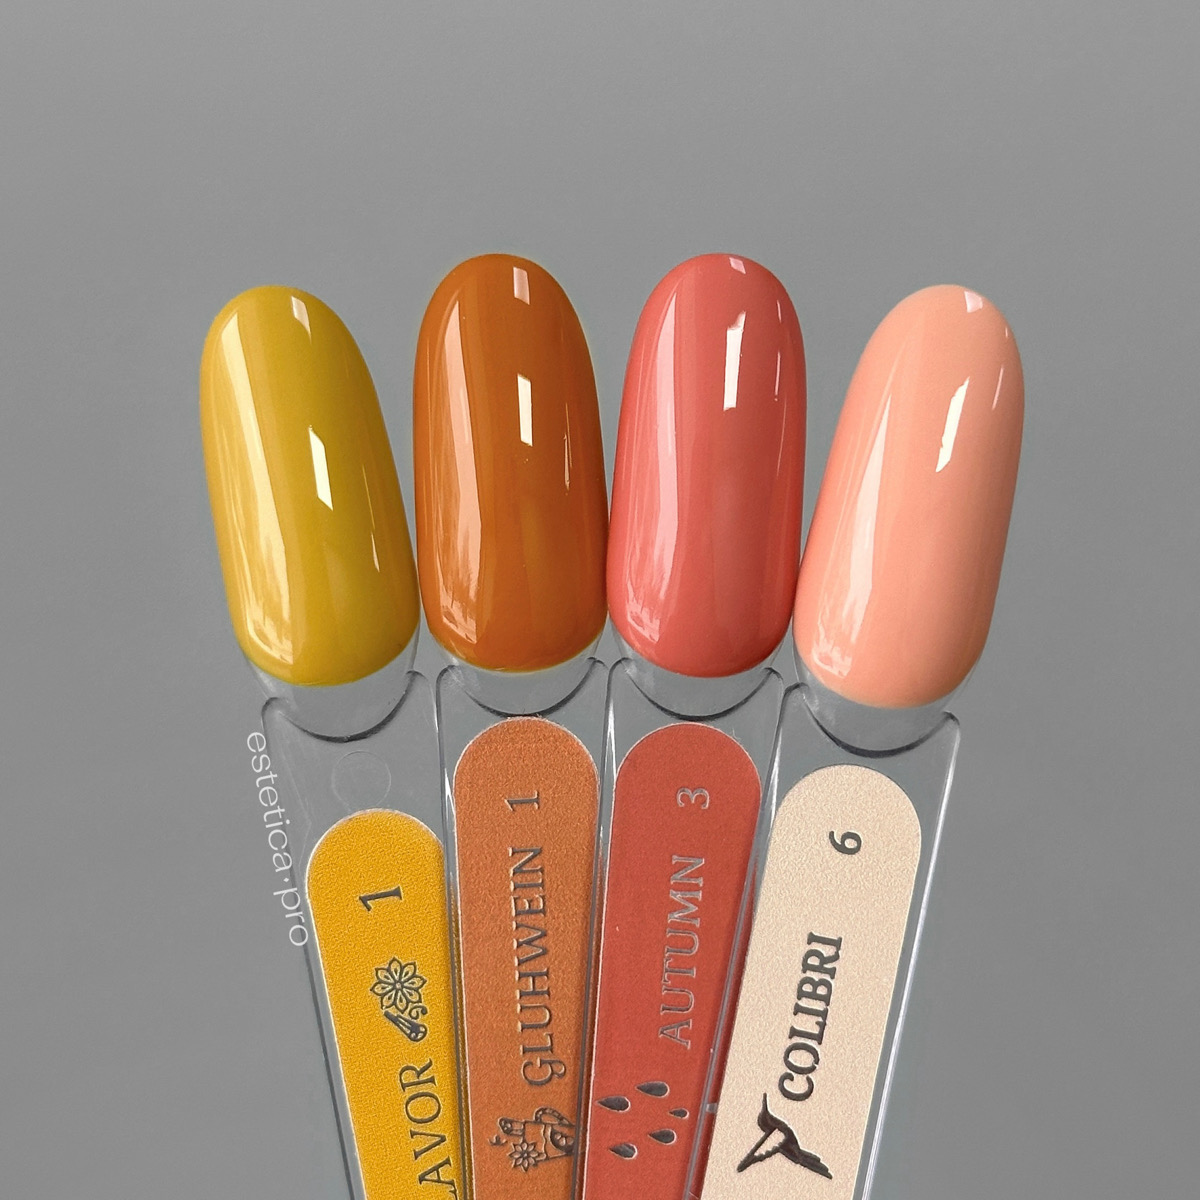 Гель-лак Iva Nails Anise Flavor 01, 8 мл.